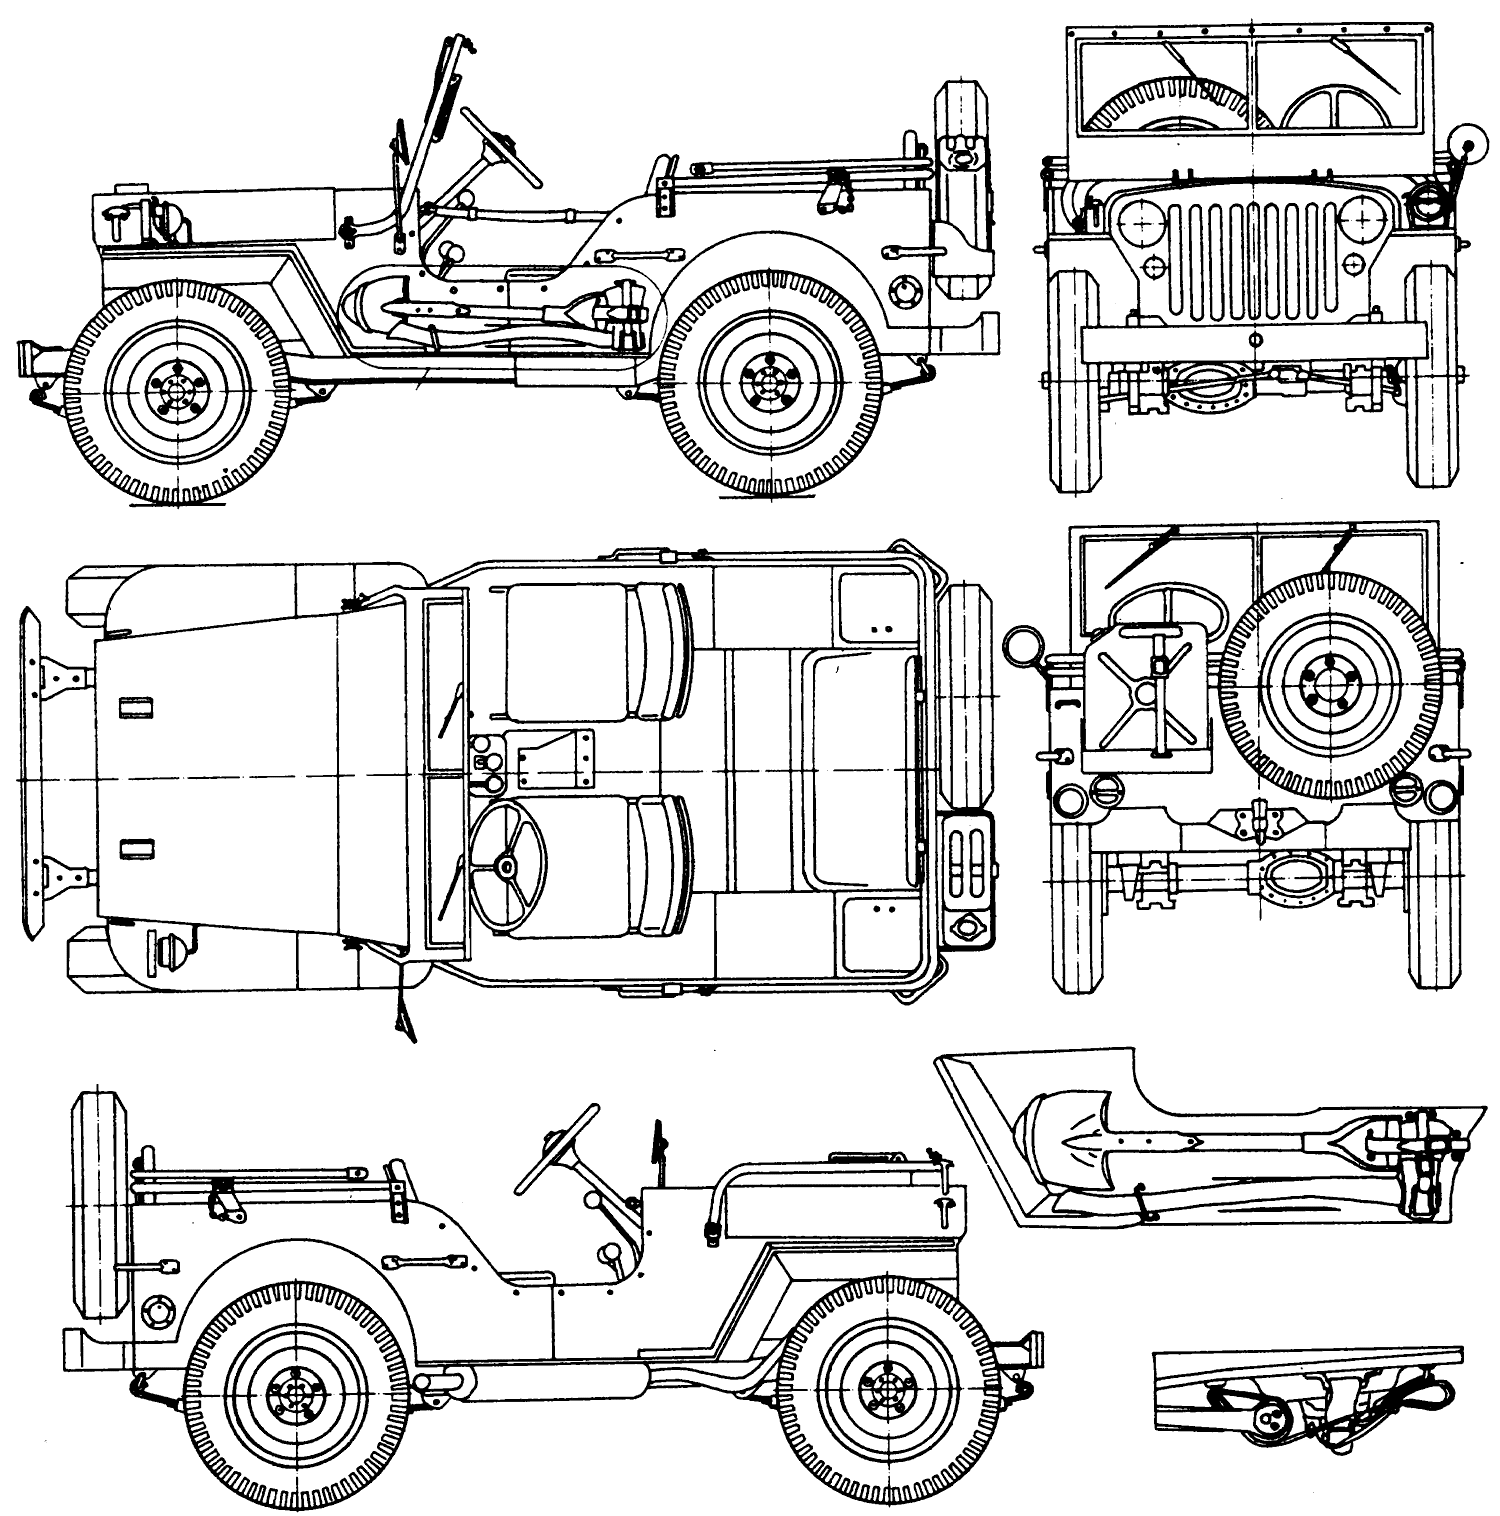 Willys MB blueprint